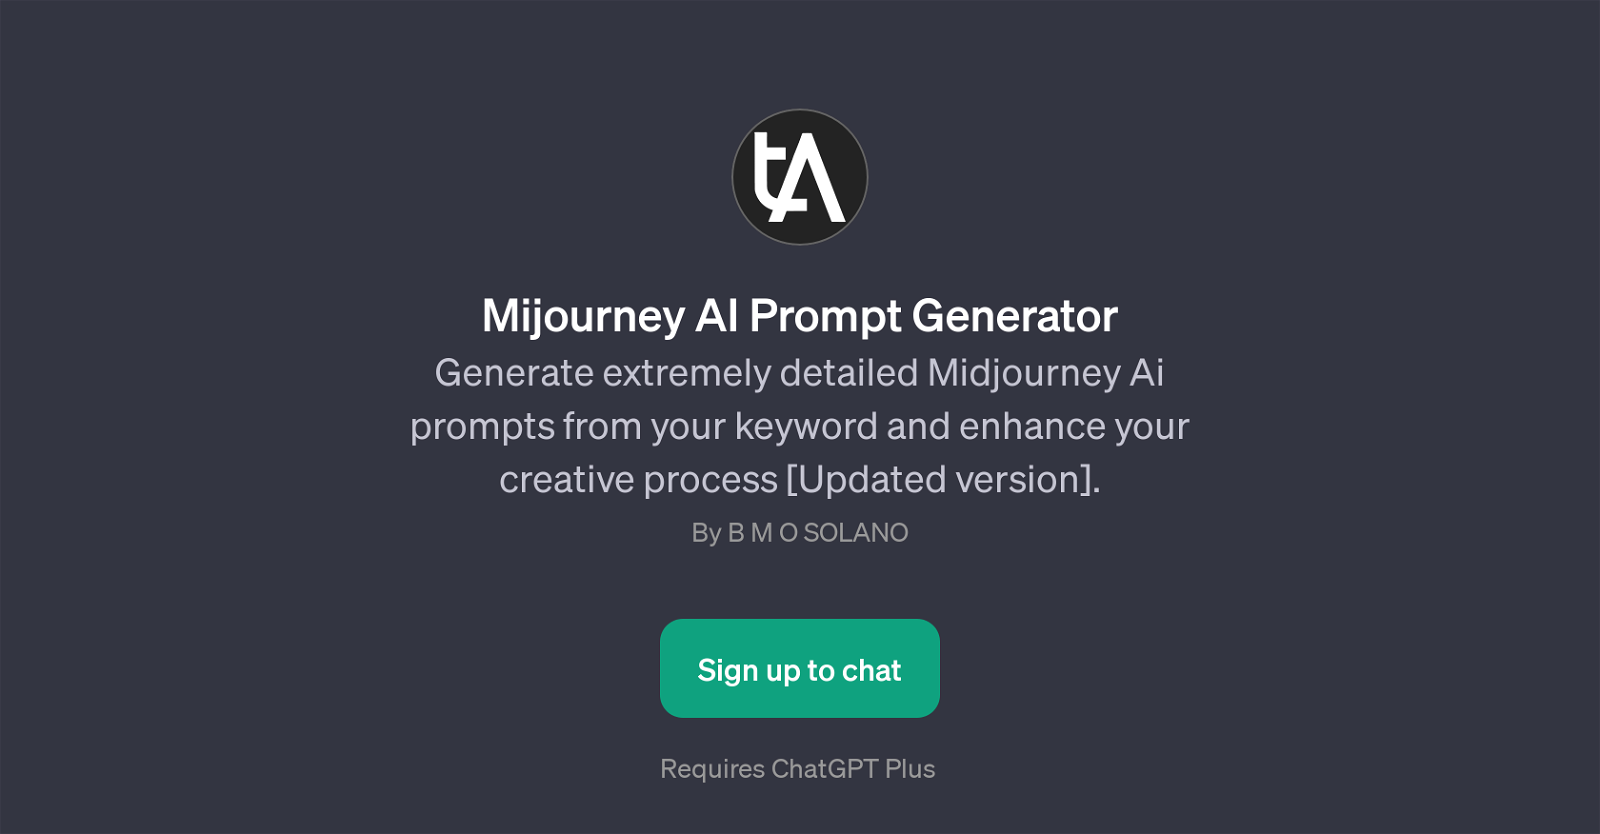 Mijourney AI Prompt Generator website